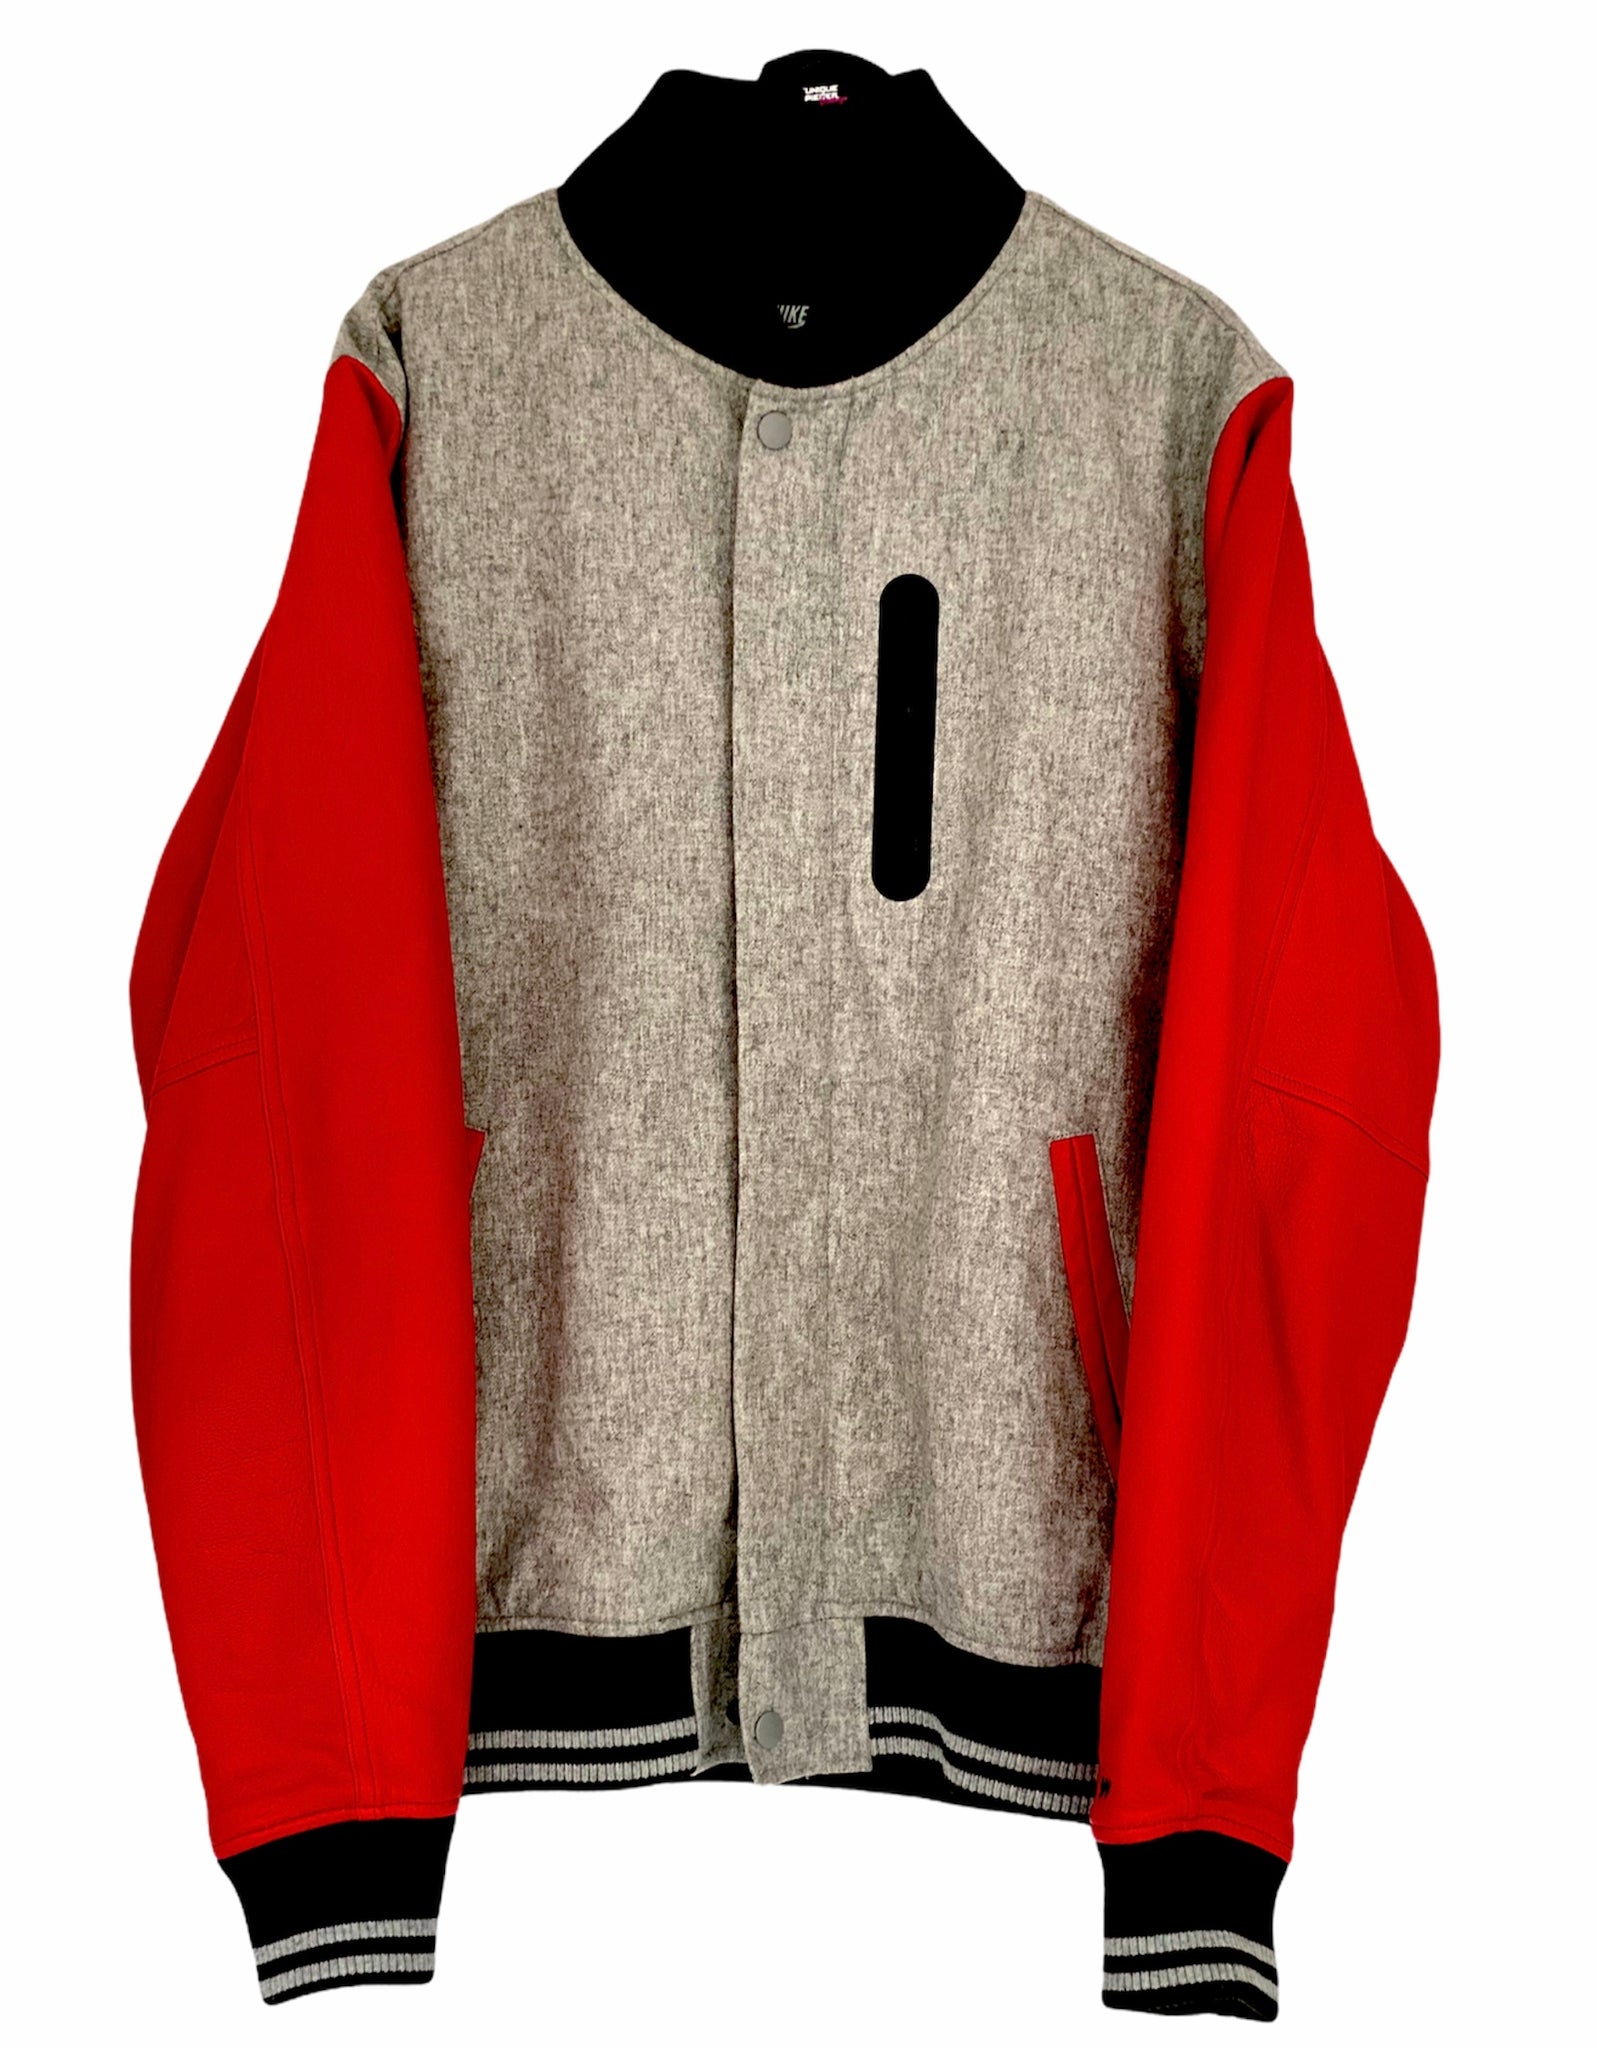 Nike Destroyer Leather Jacket J Cole grey/ red  black Size Xlarge